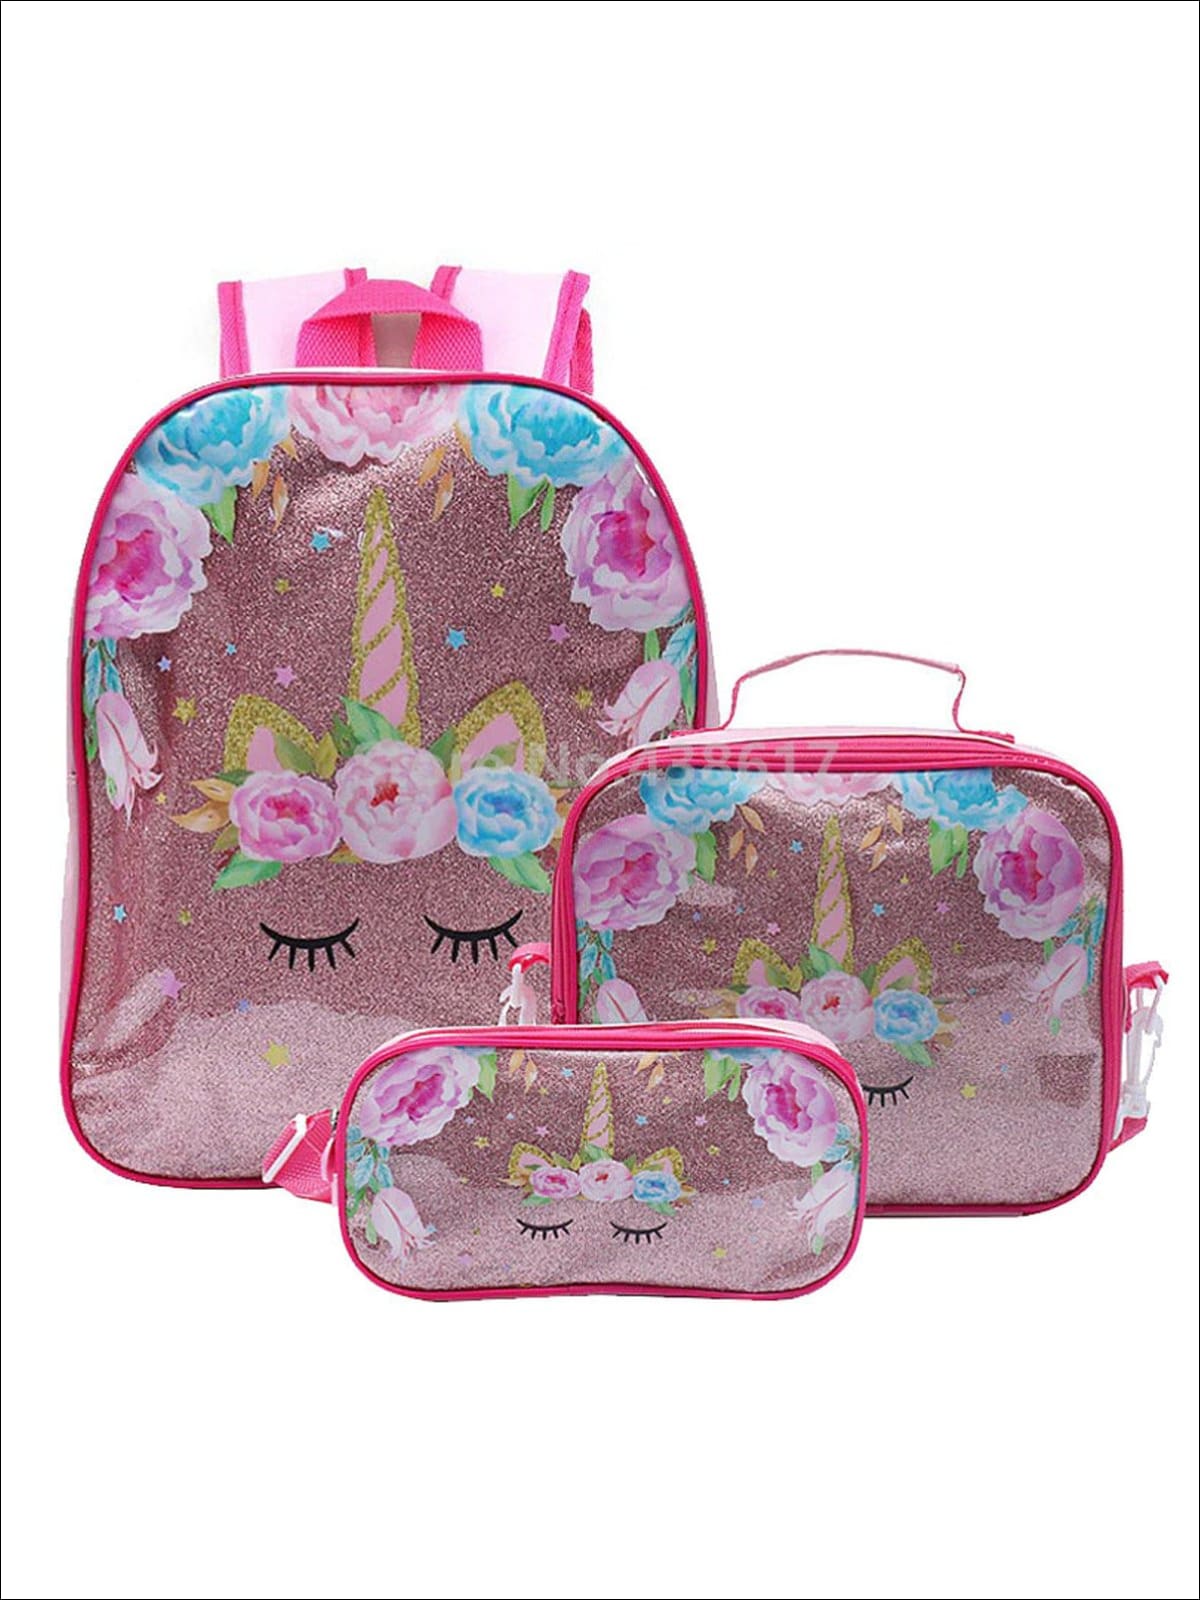 Girl School Backpack Lunch Box, Backpack Lunchbox Set Girl